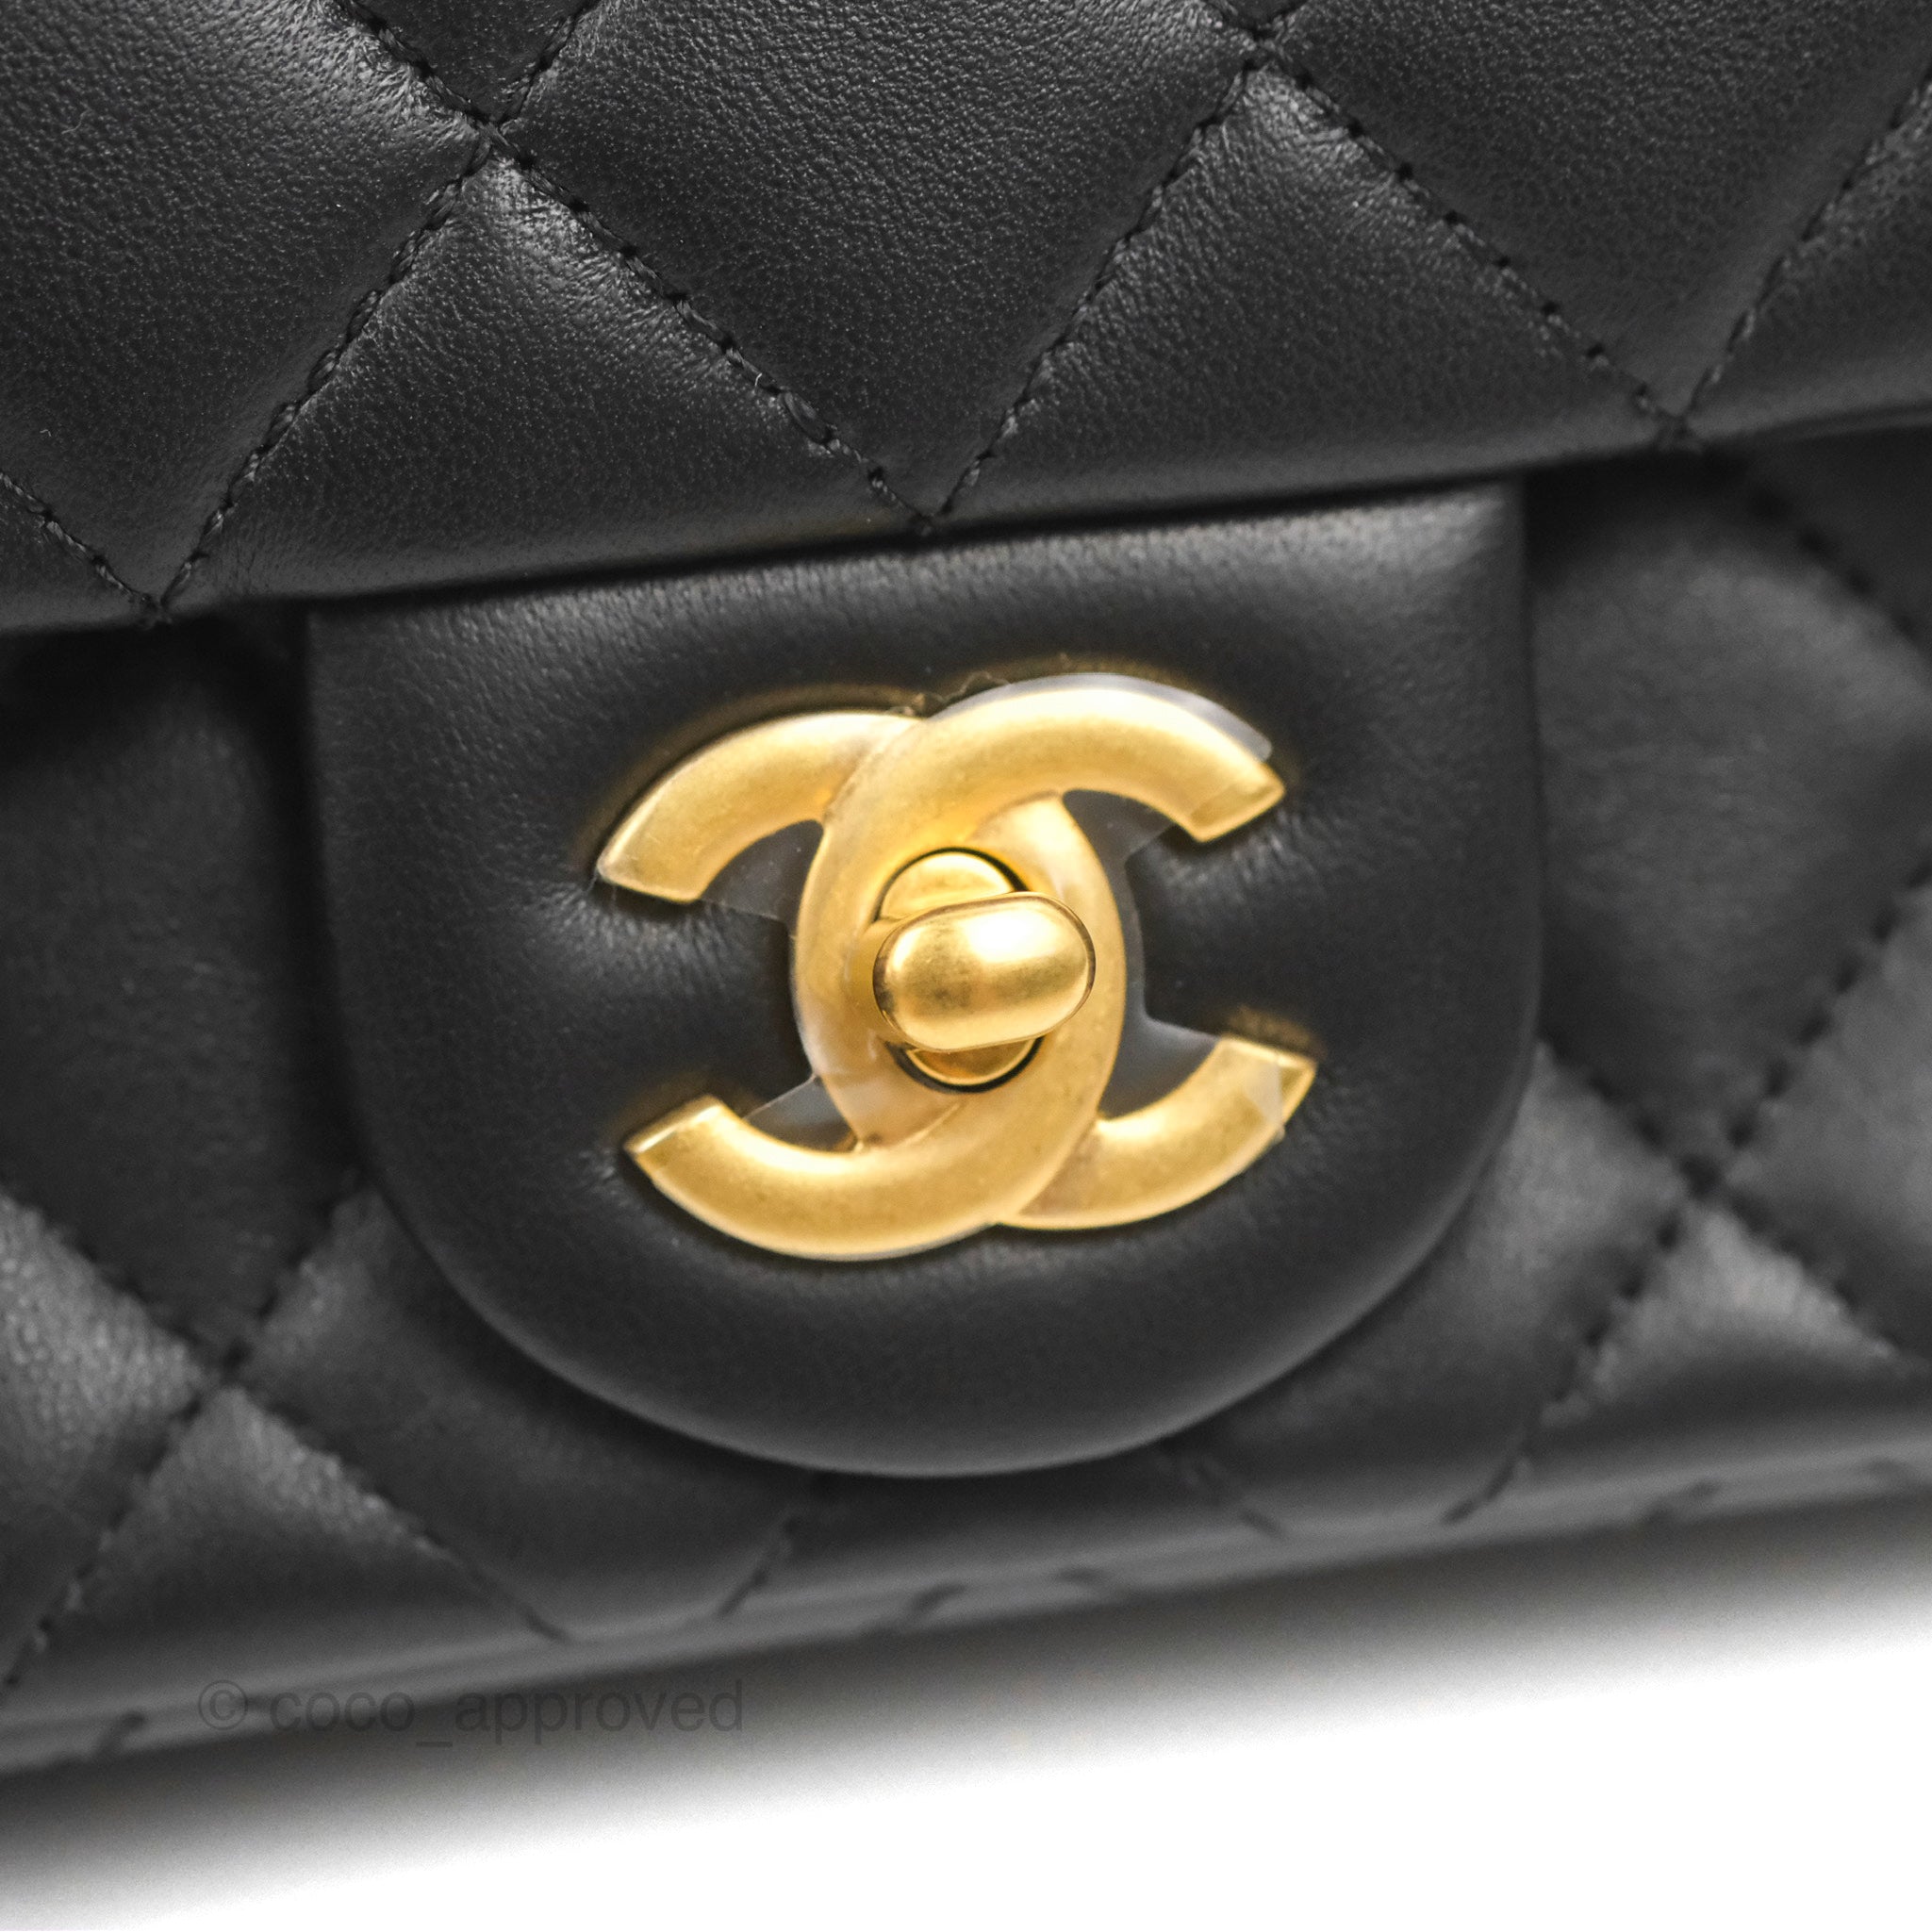 Chanel Chain-Embellished Mini Flap Bag in Black Calfskin — UFO No More